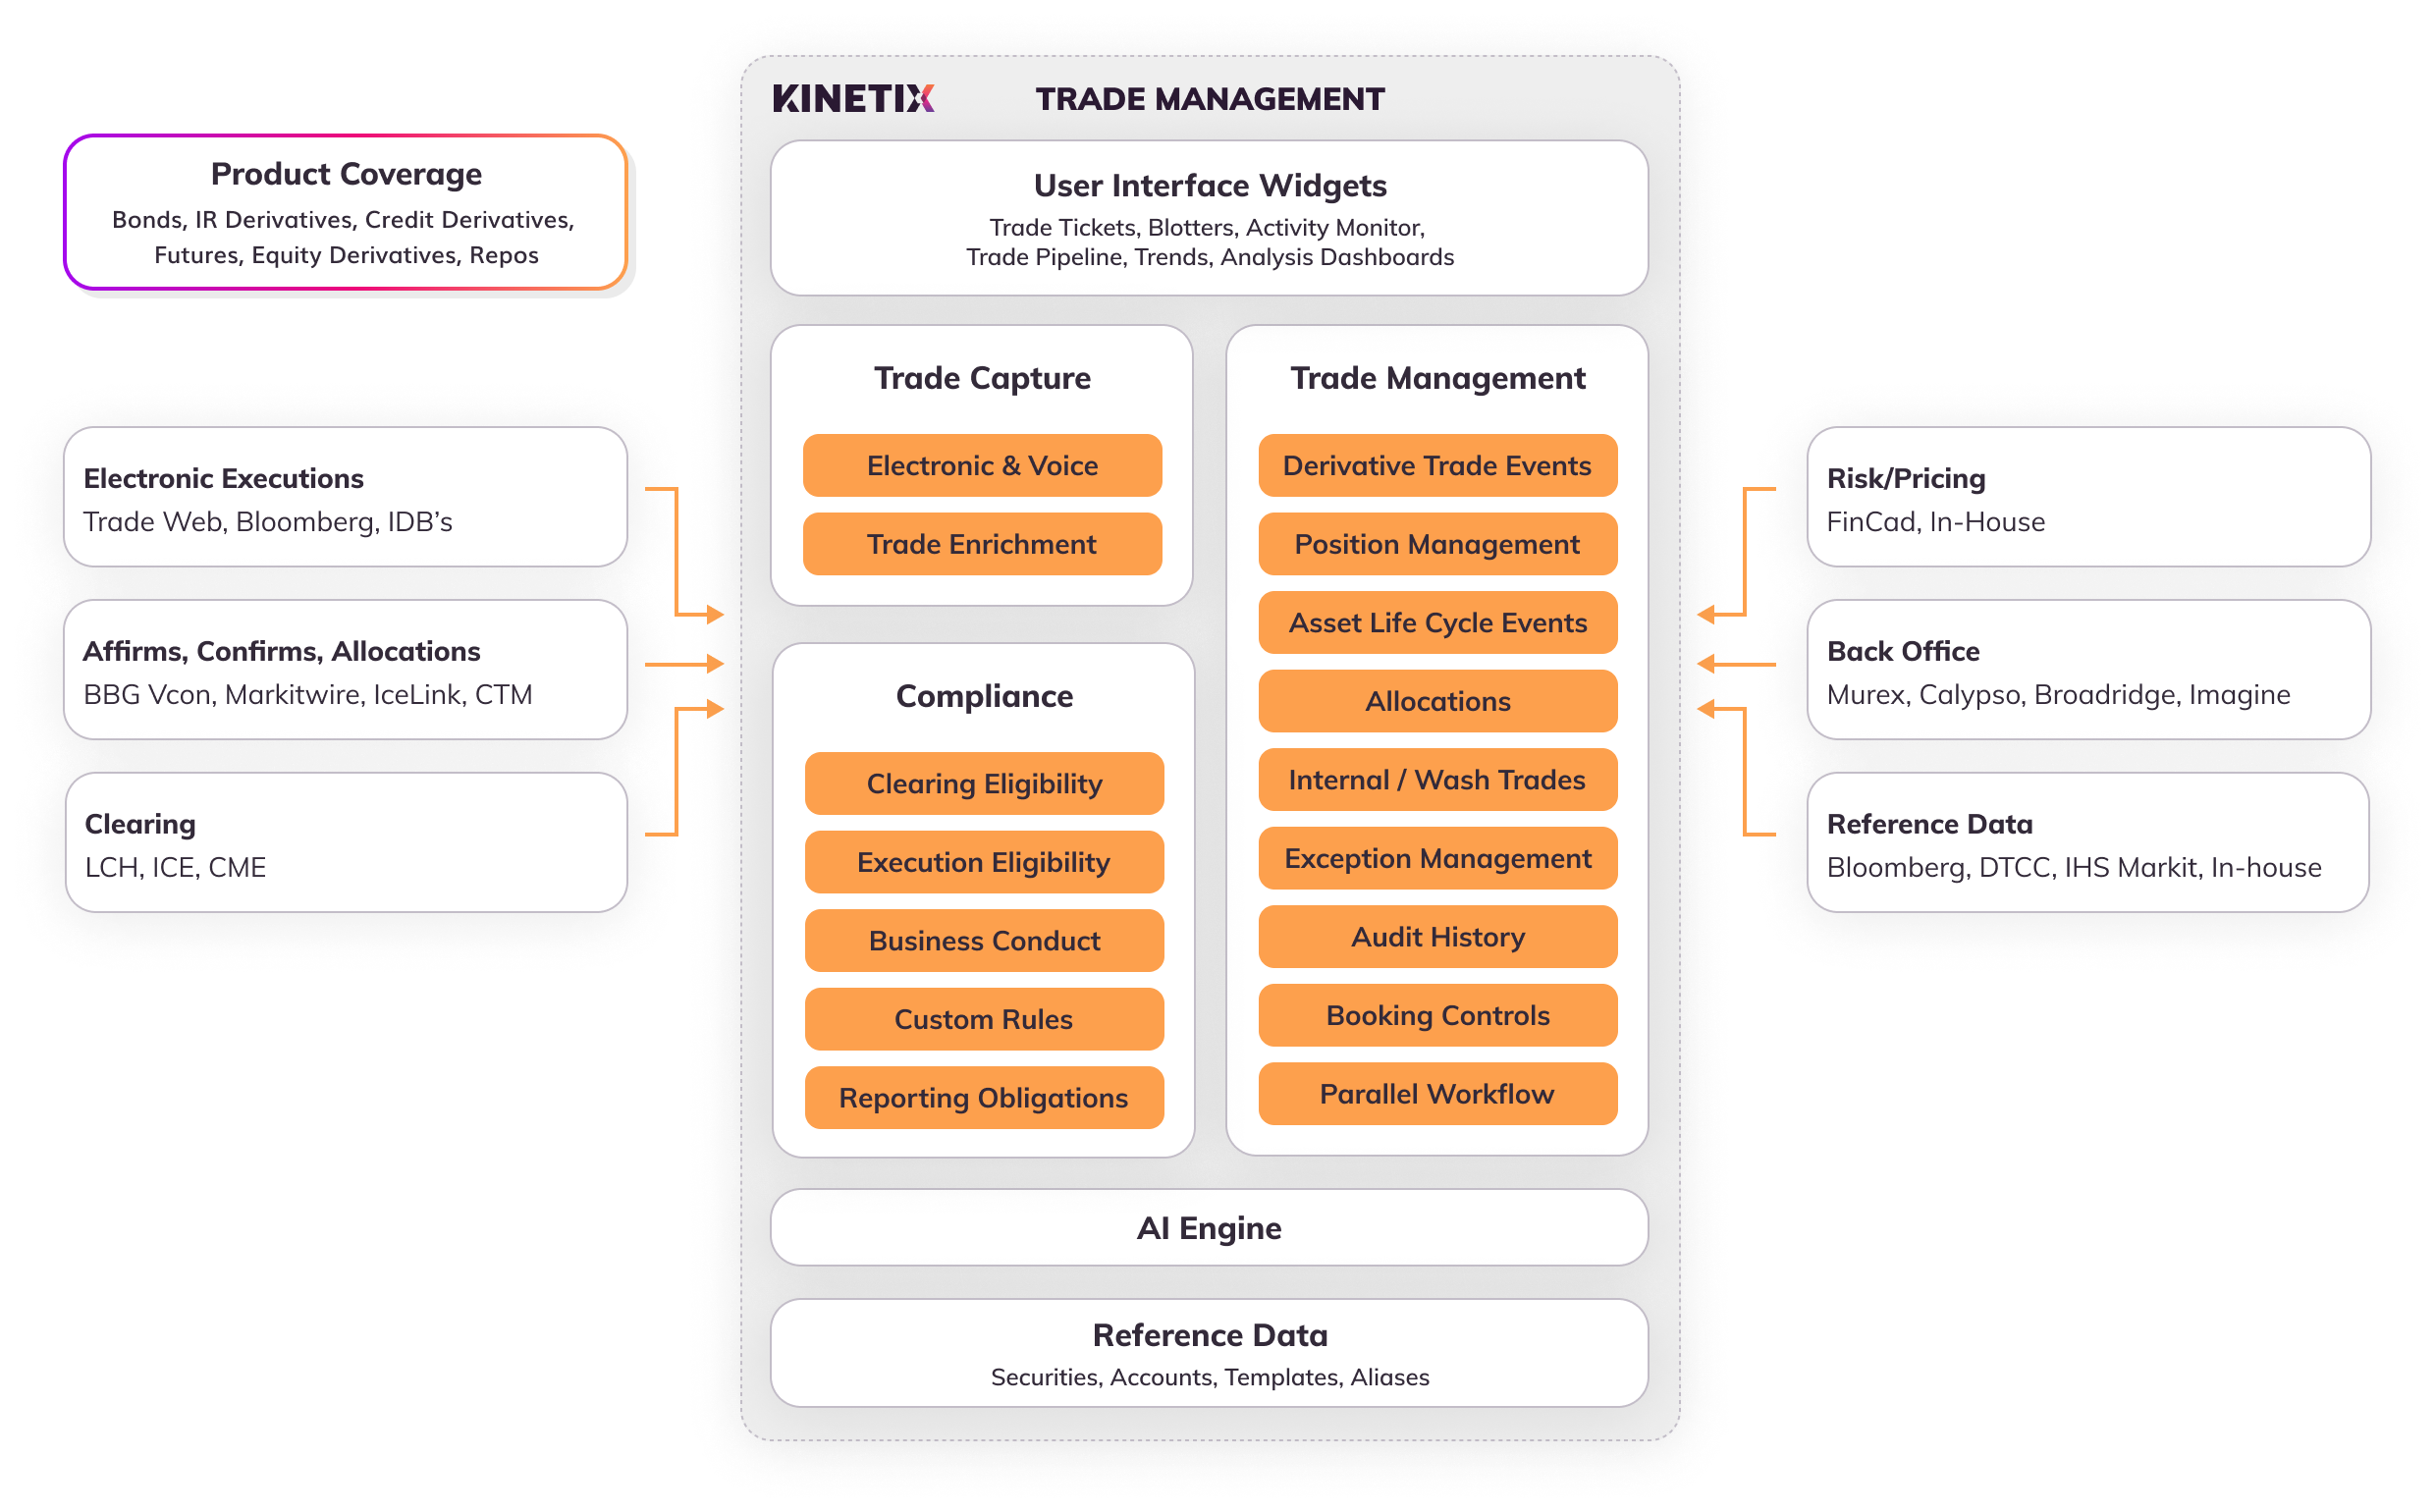 Kinetix Trade Management Solution Overview